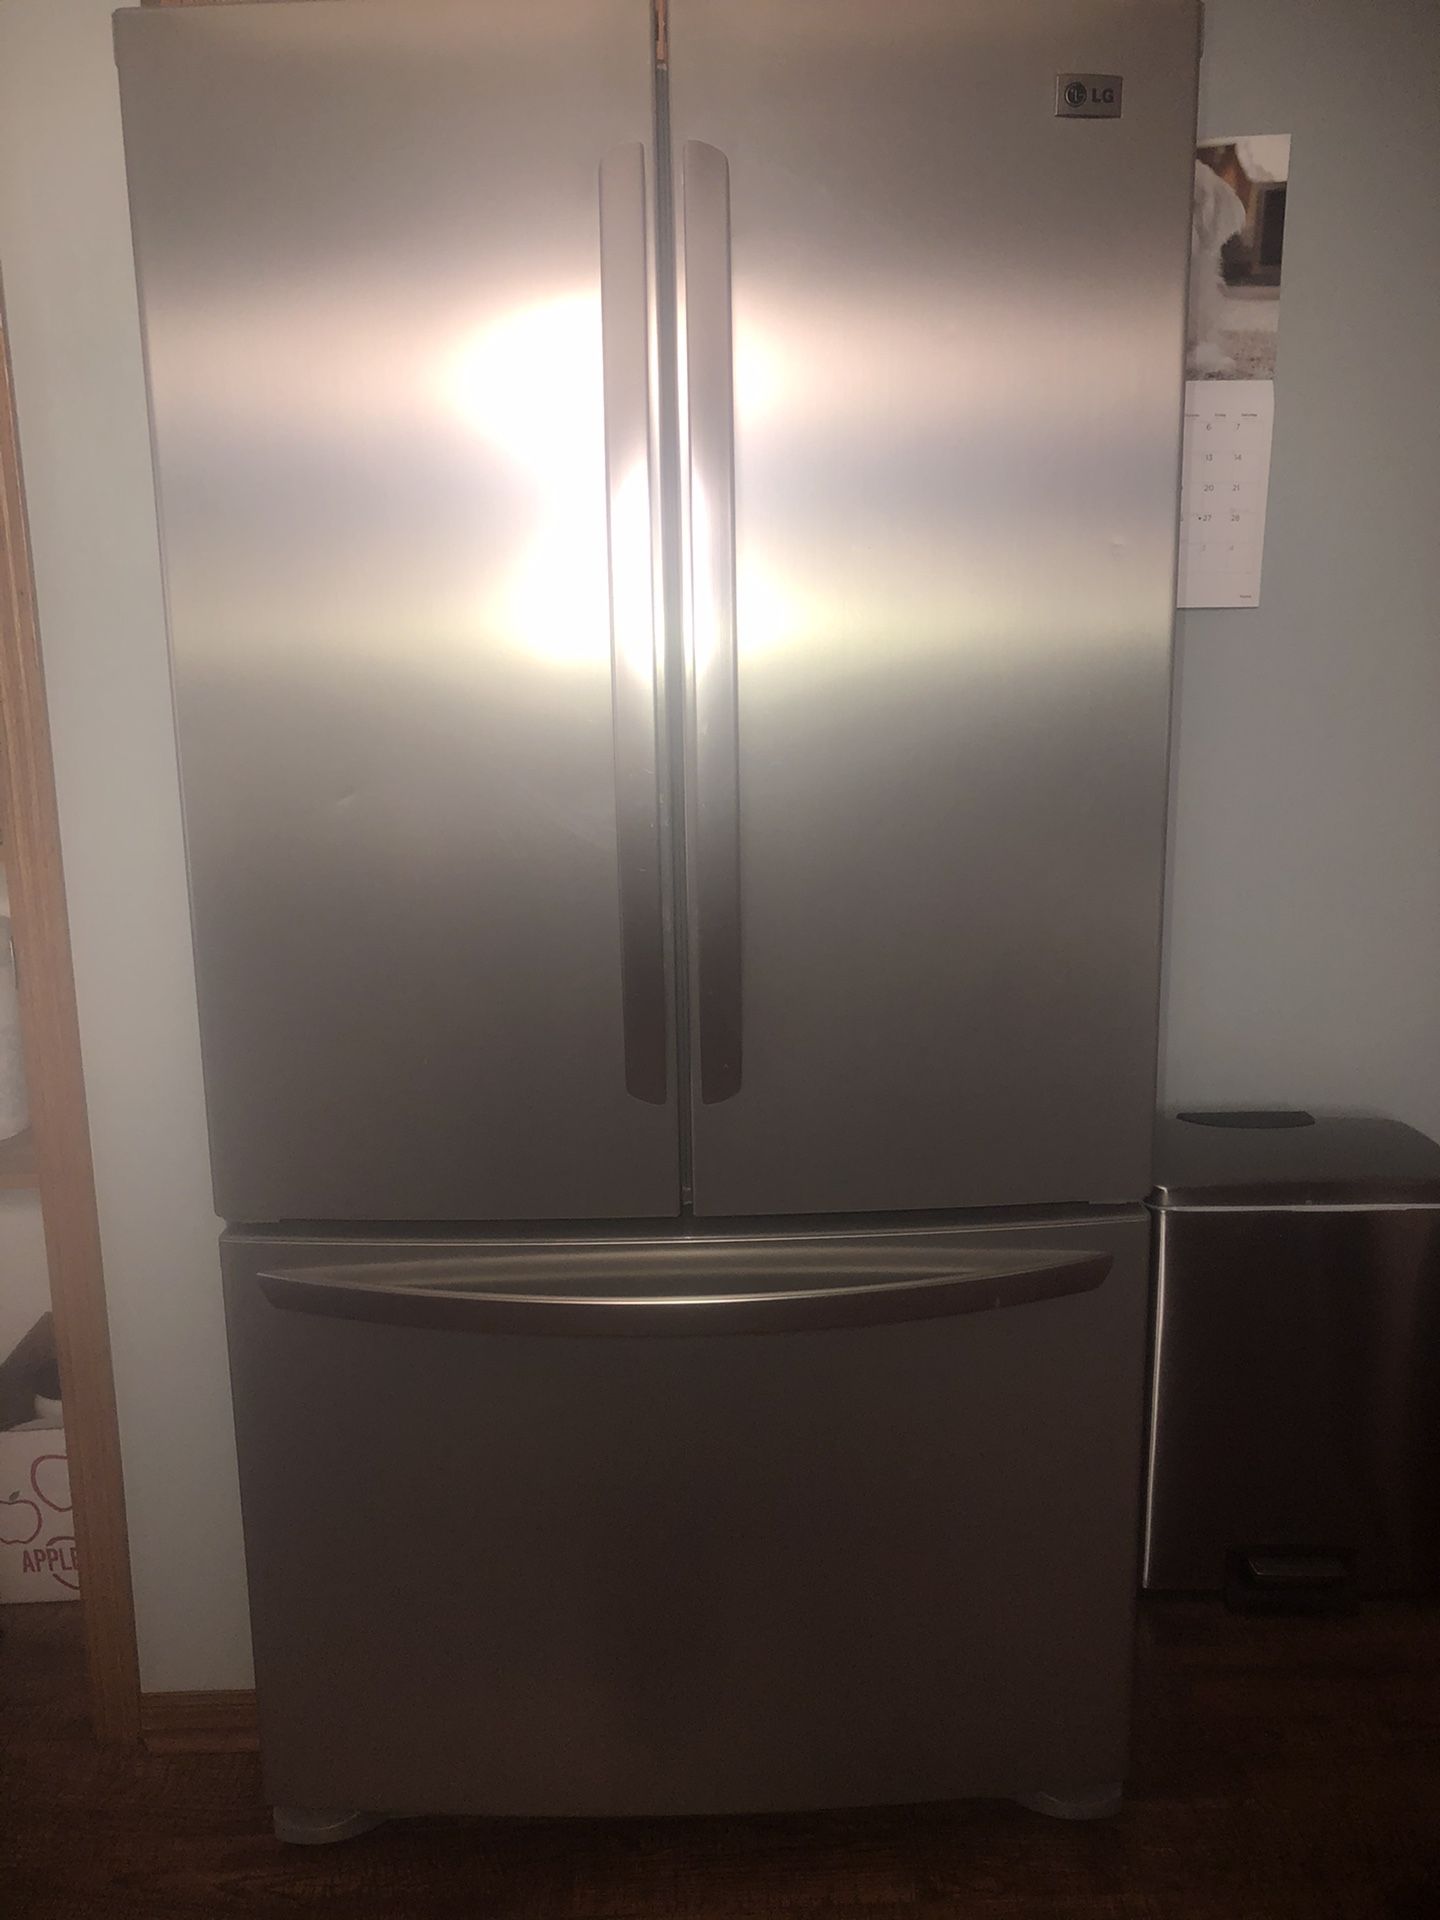 LG Refrigerator 3 Doors Ice maker